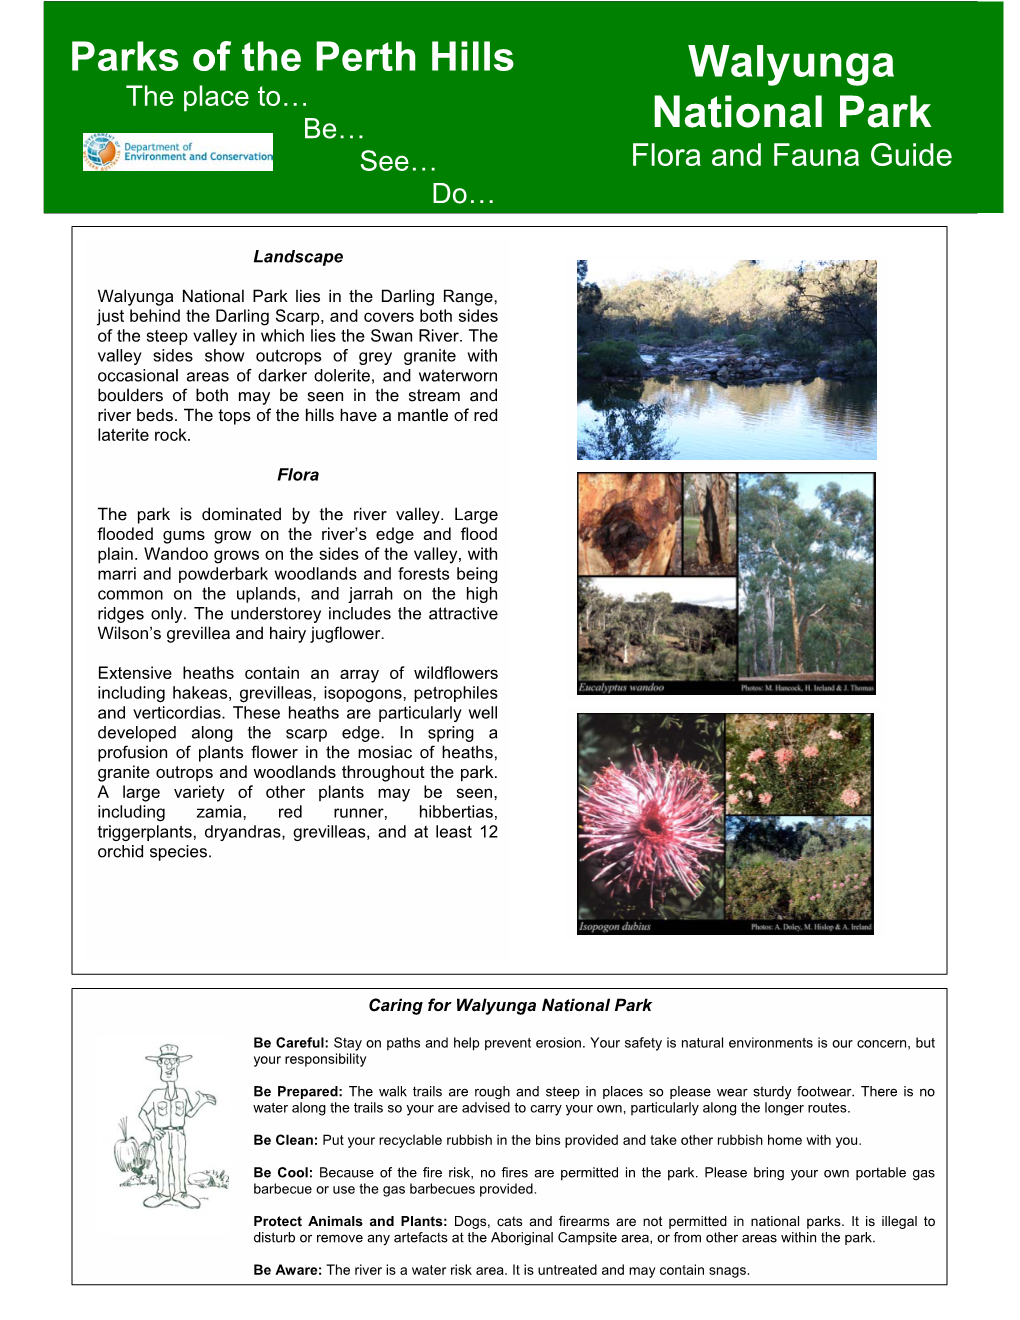 Walyunga National Park Flora and Fauna Guide